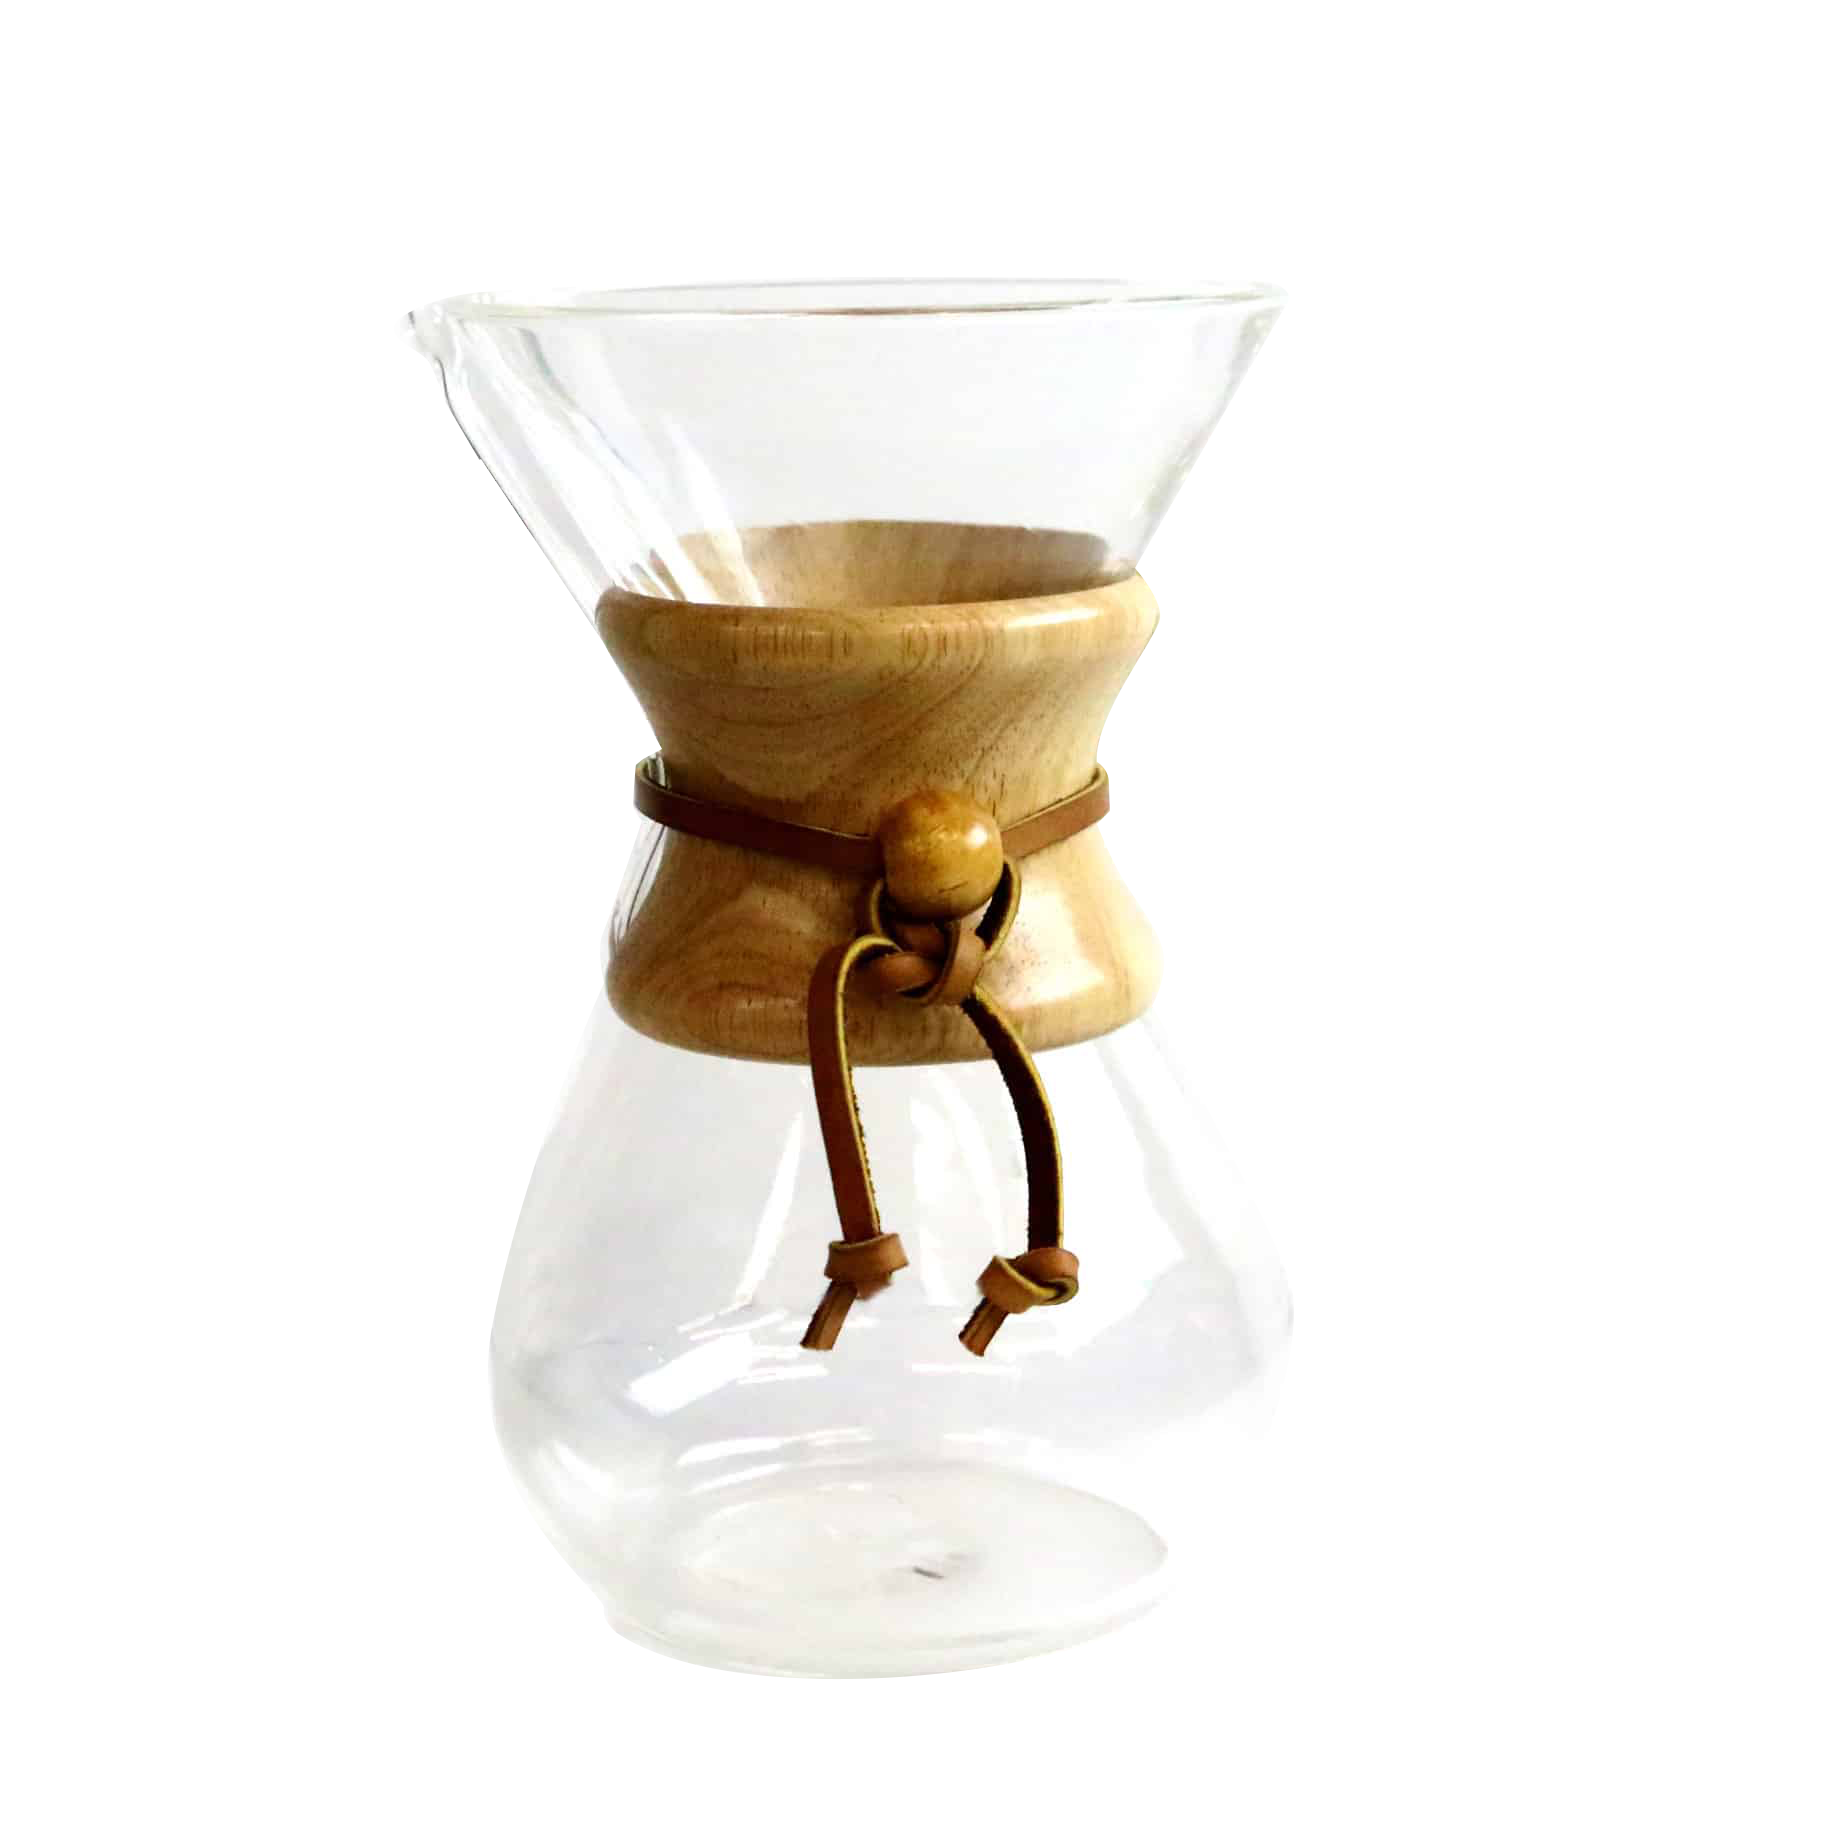 Chemex Coffeemaker – Rostovs Coffee and Tea